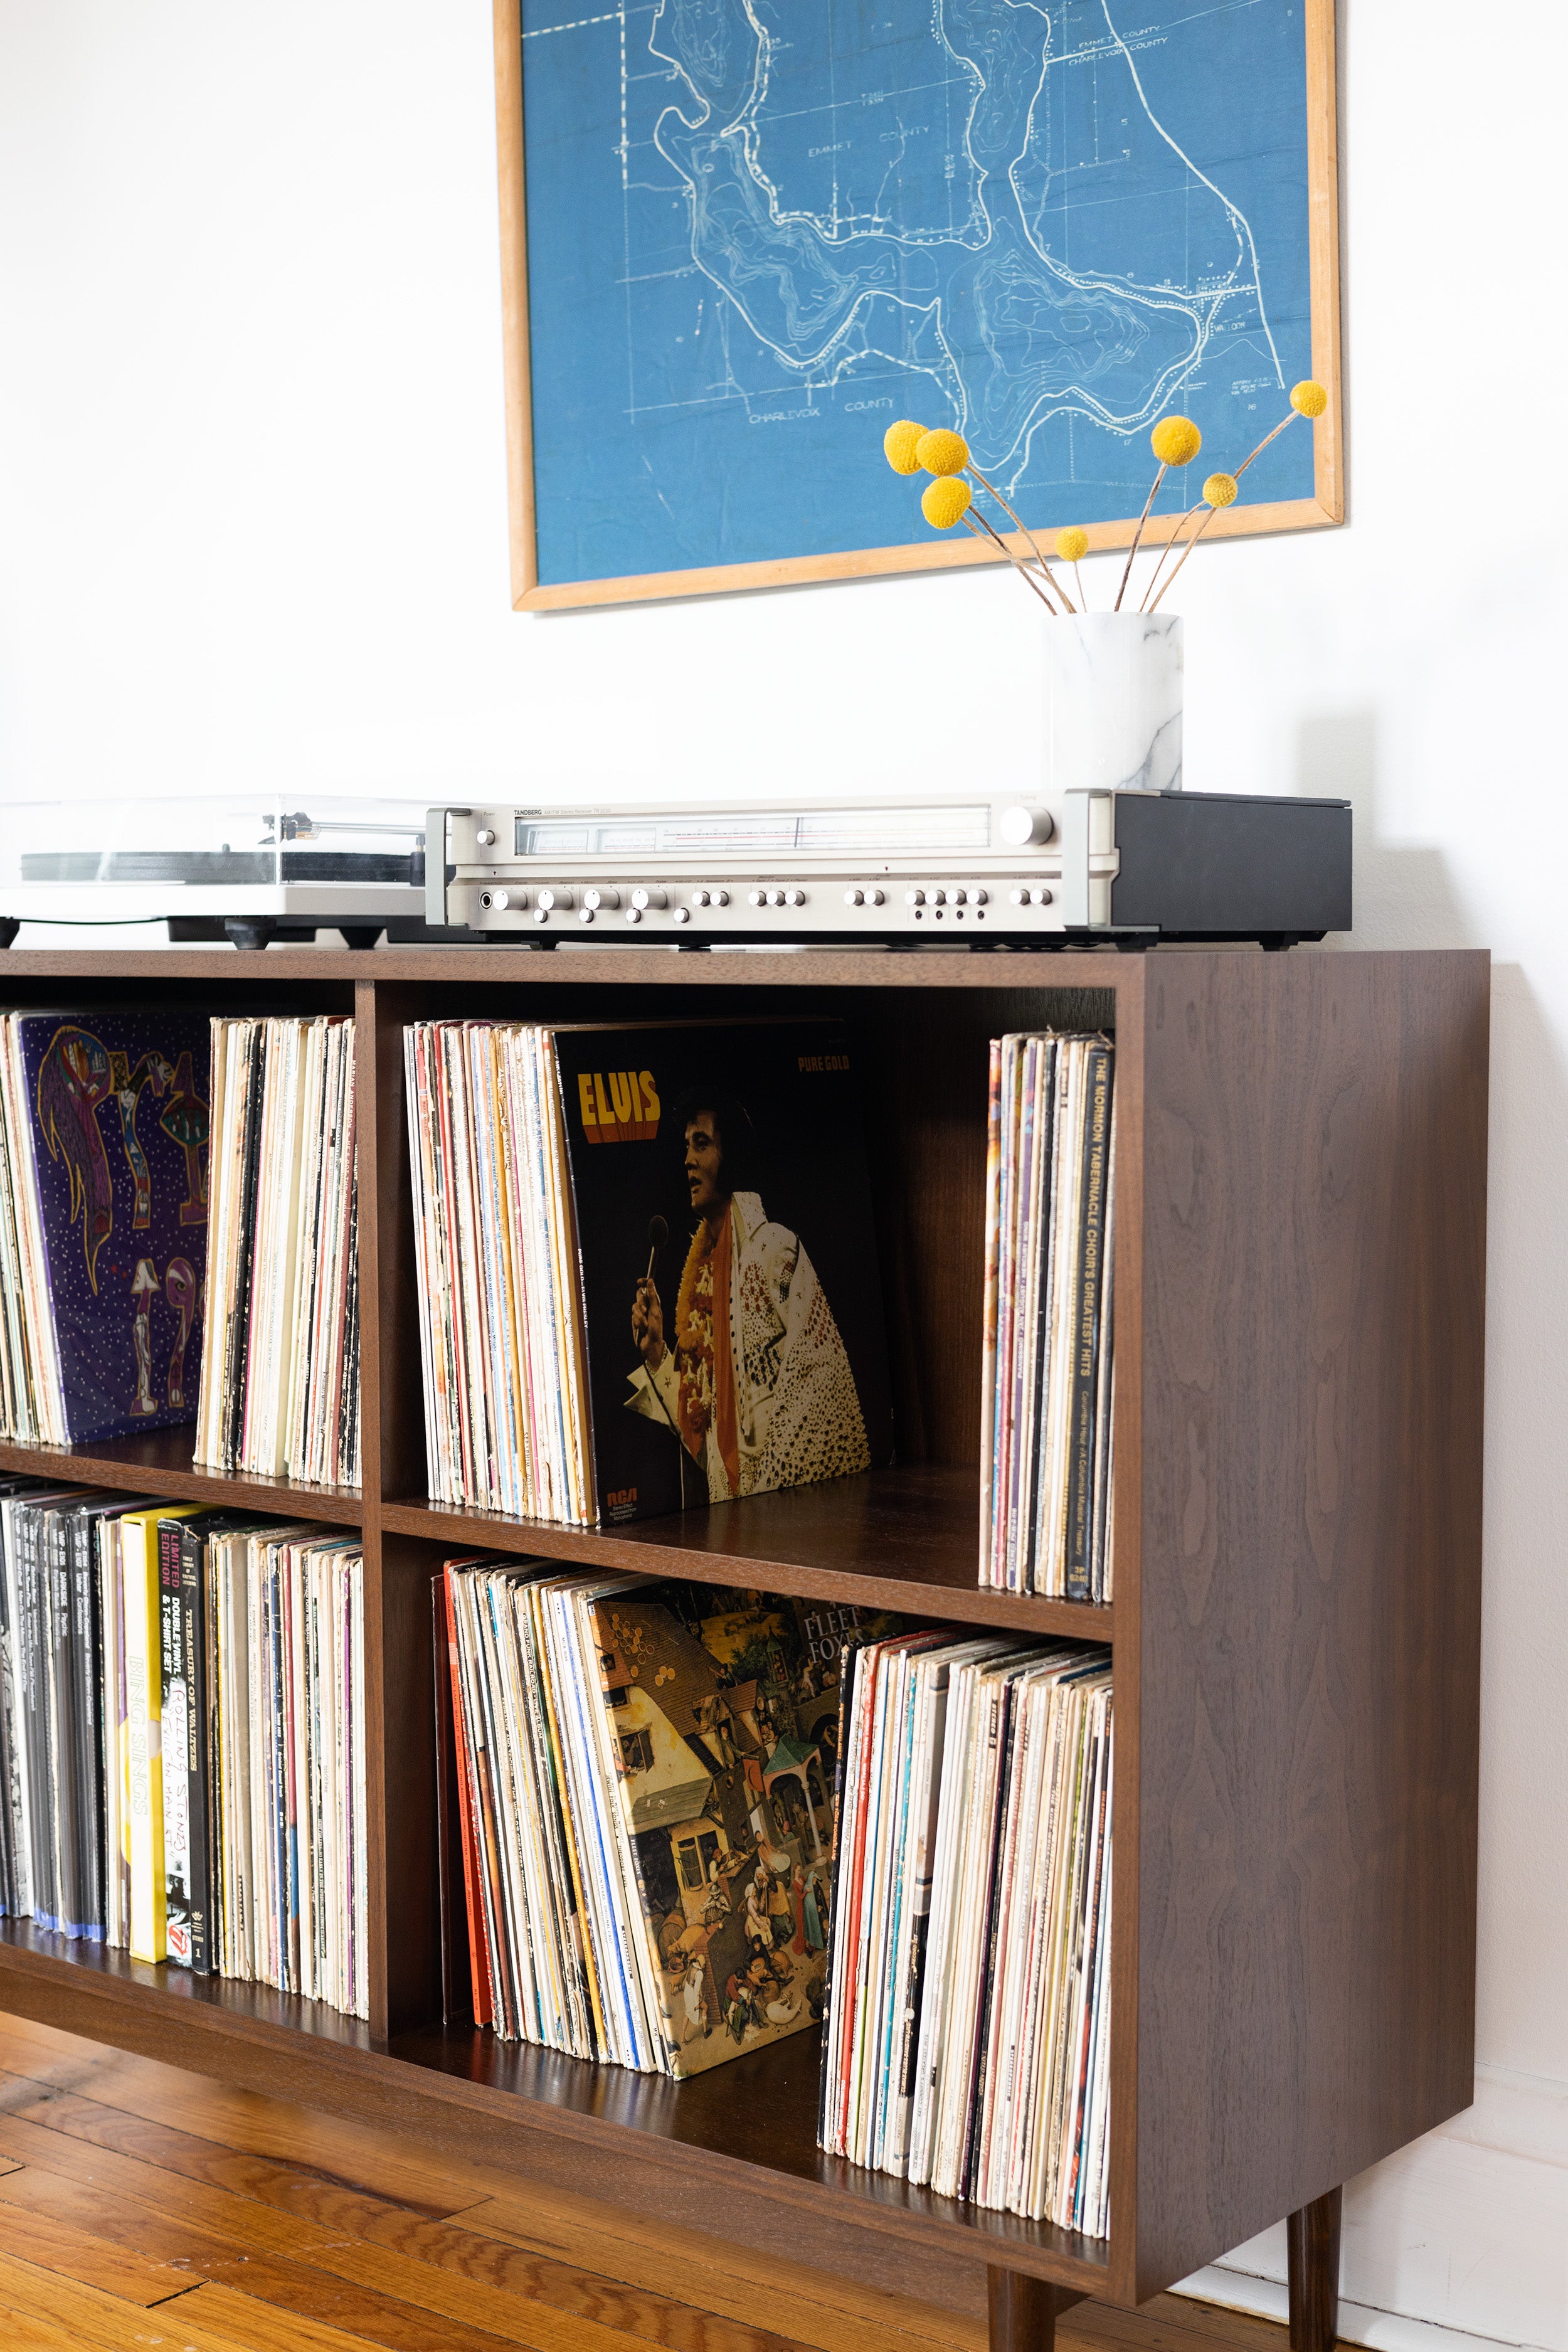 2 x 2 Record Storage Cabinet